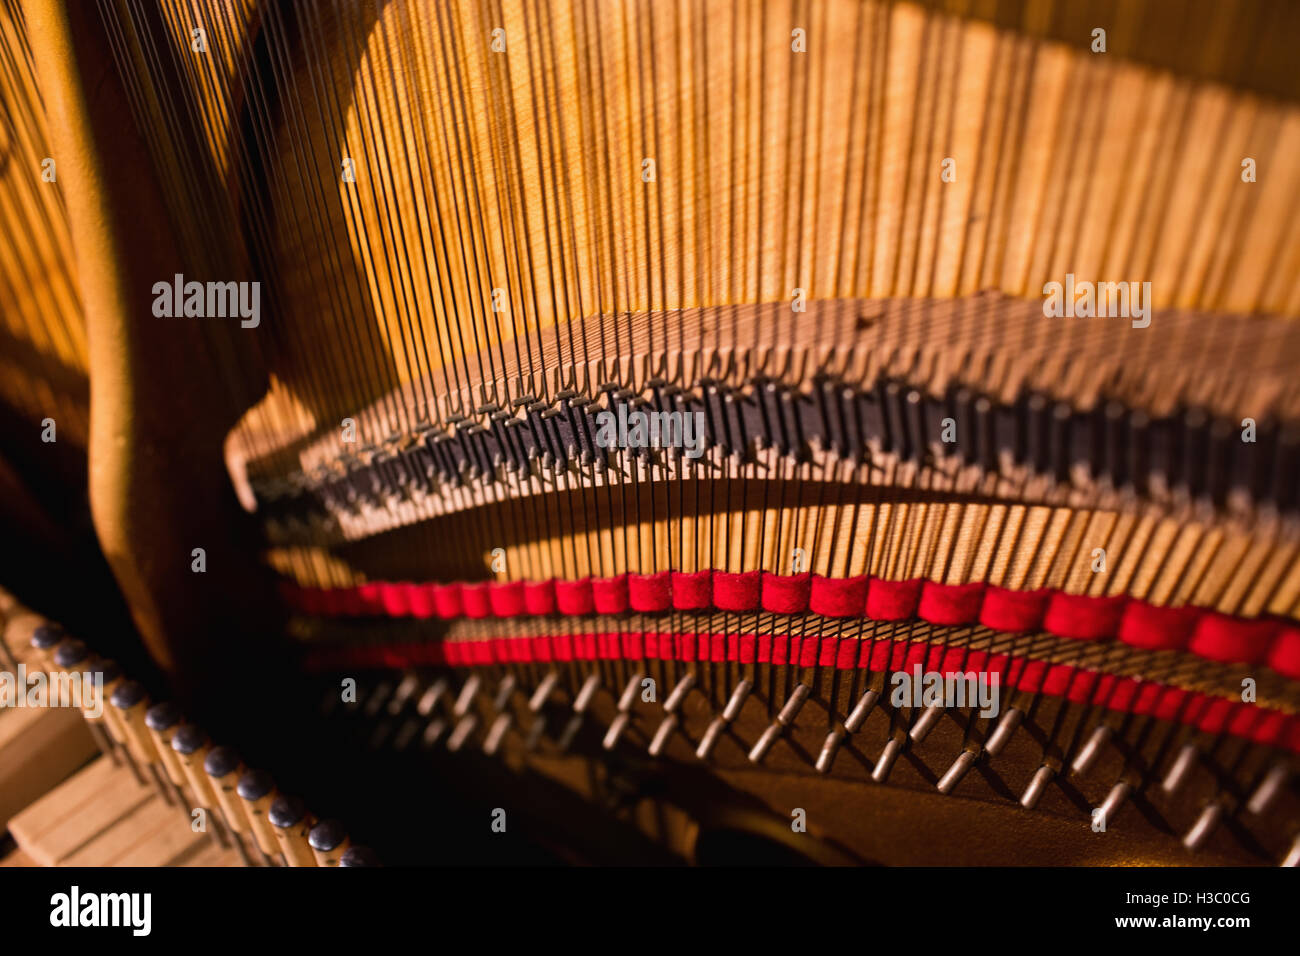 Open piano strings Stock Photo